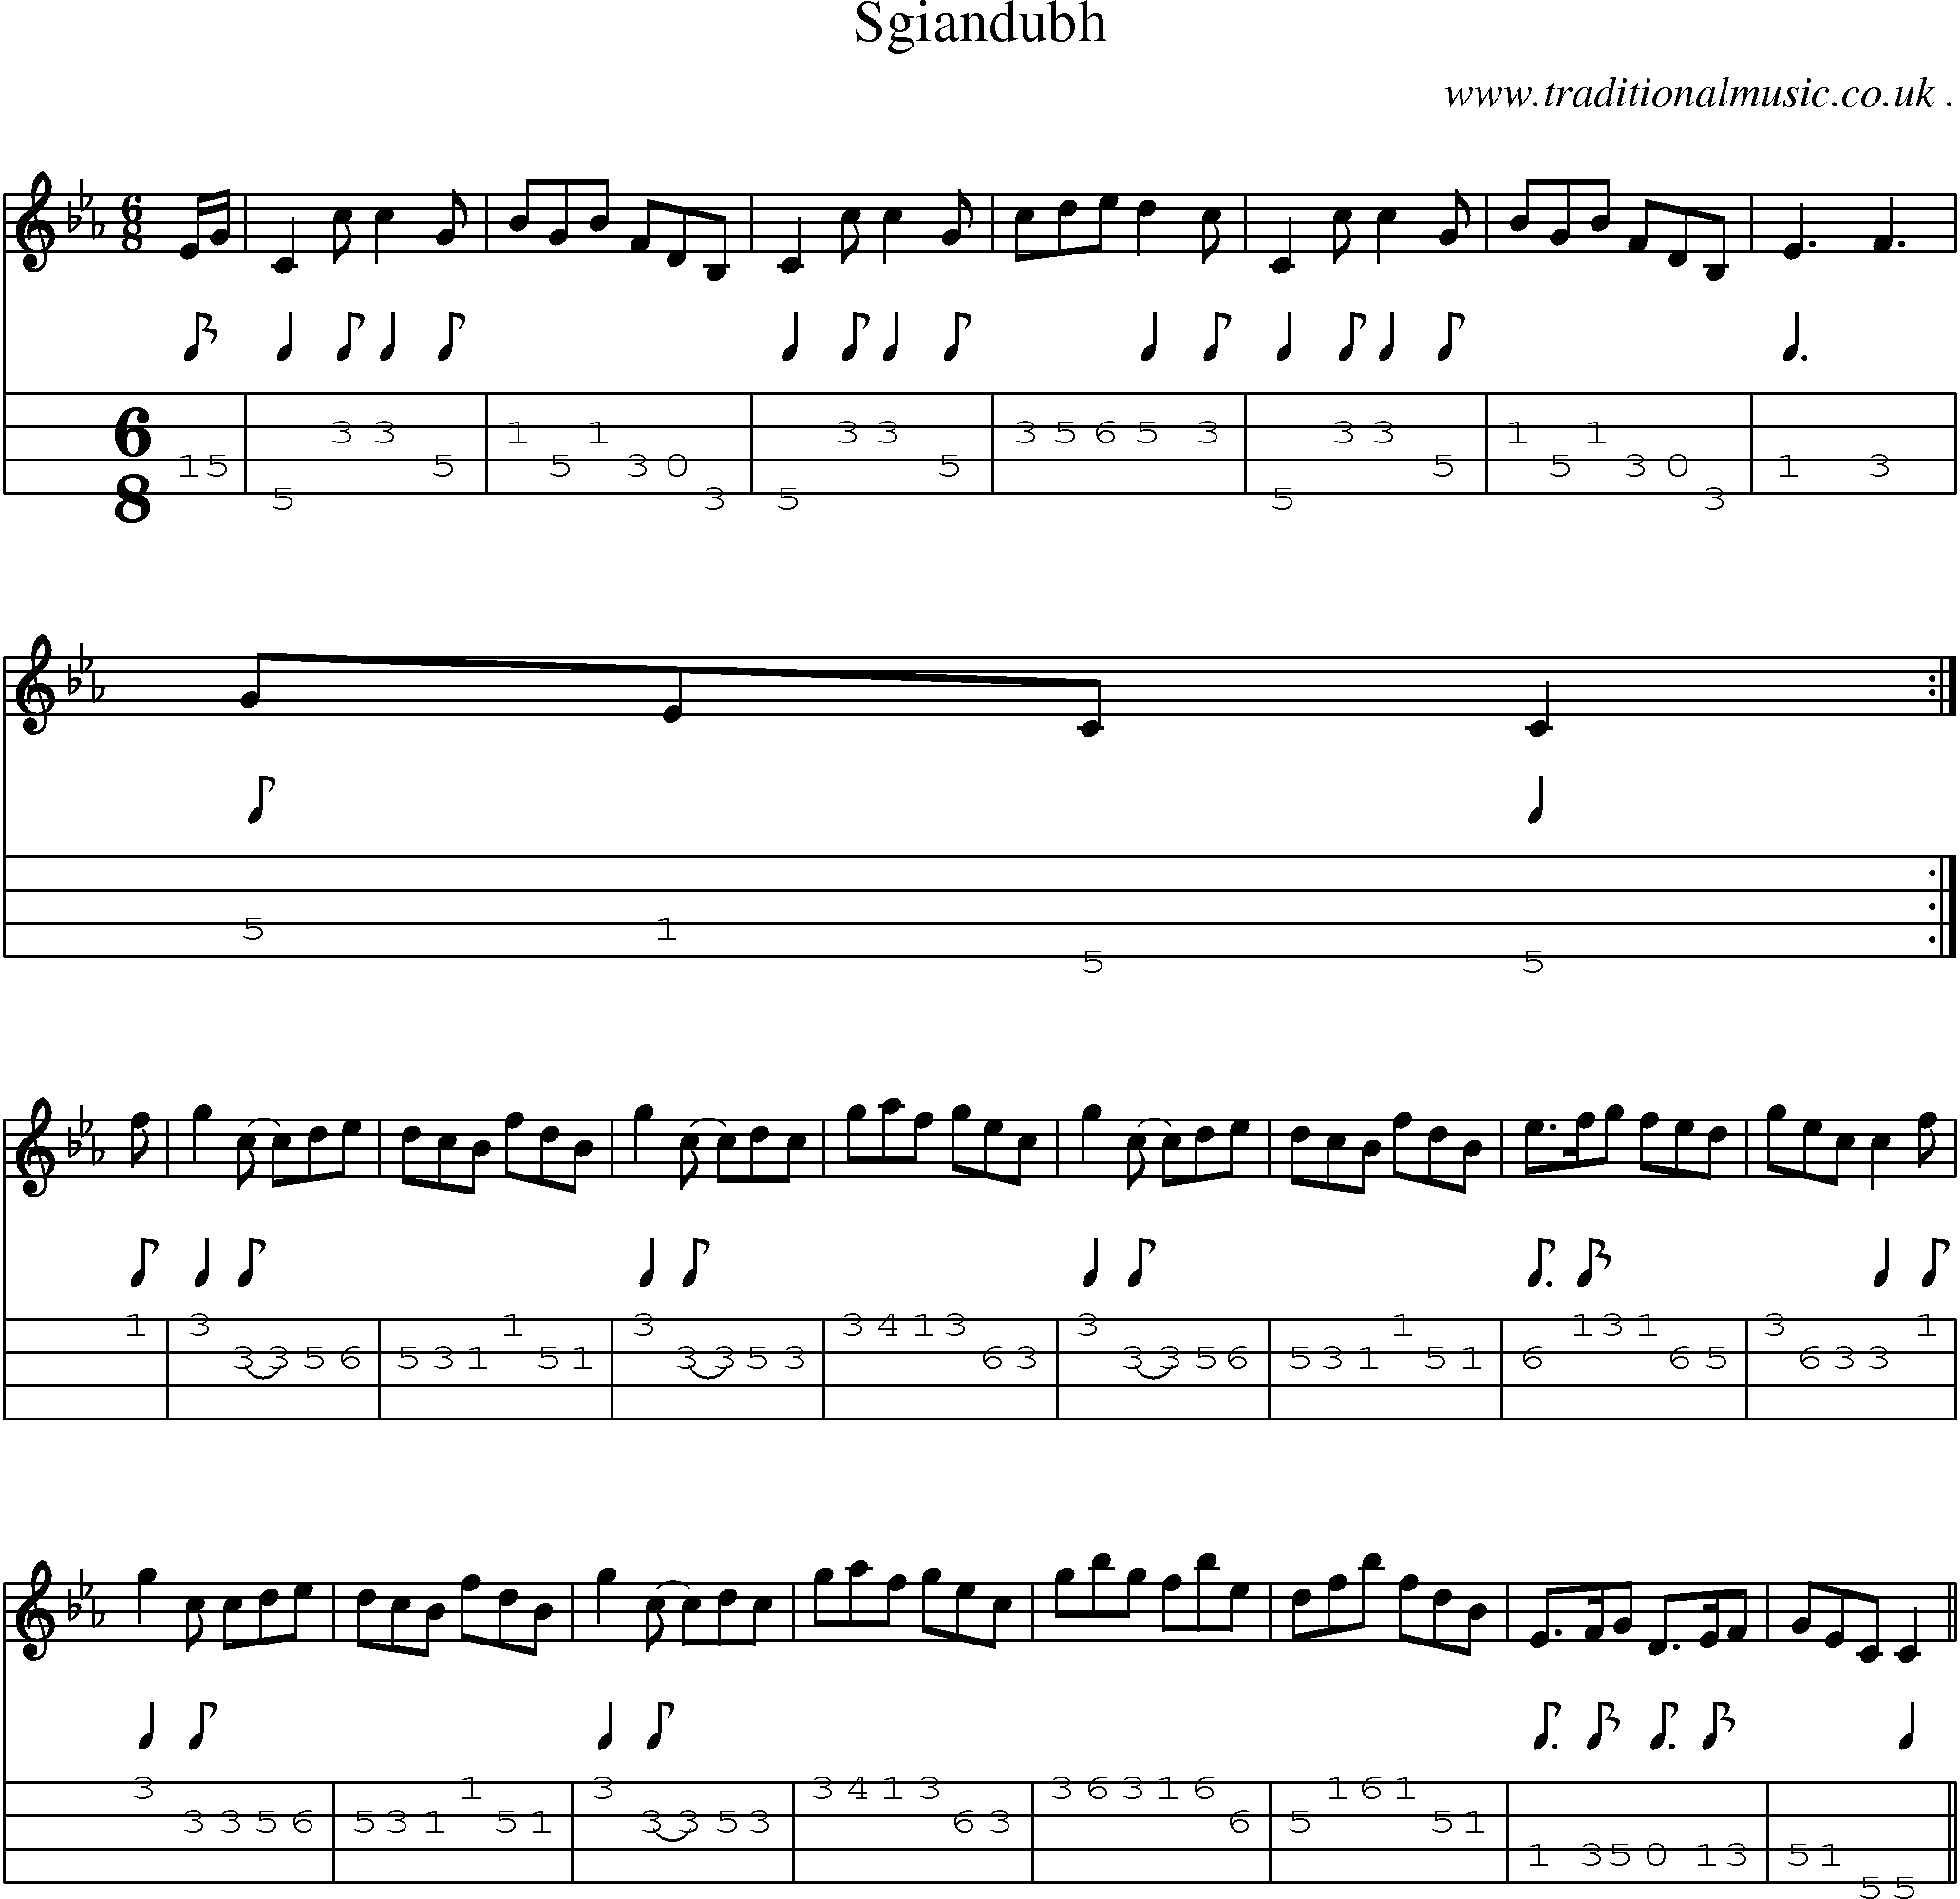 Sheet-music  score, Chords and Mandolin Tabs for Sgiandubh